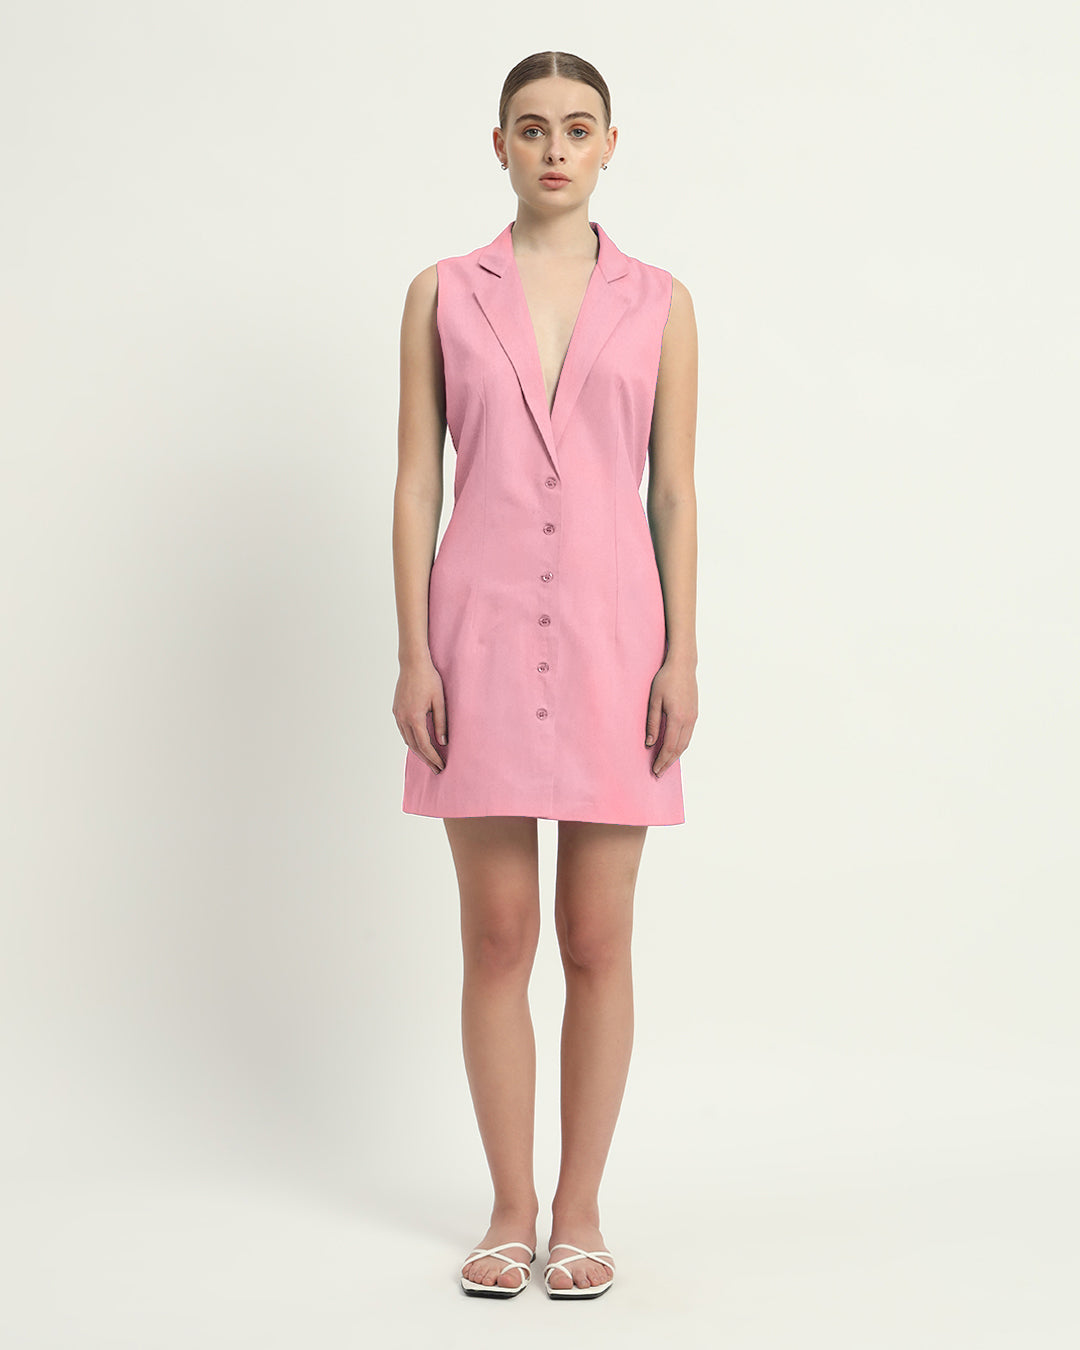 The Fondant Pink Vernon Cotton Dress